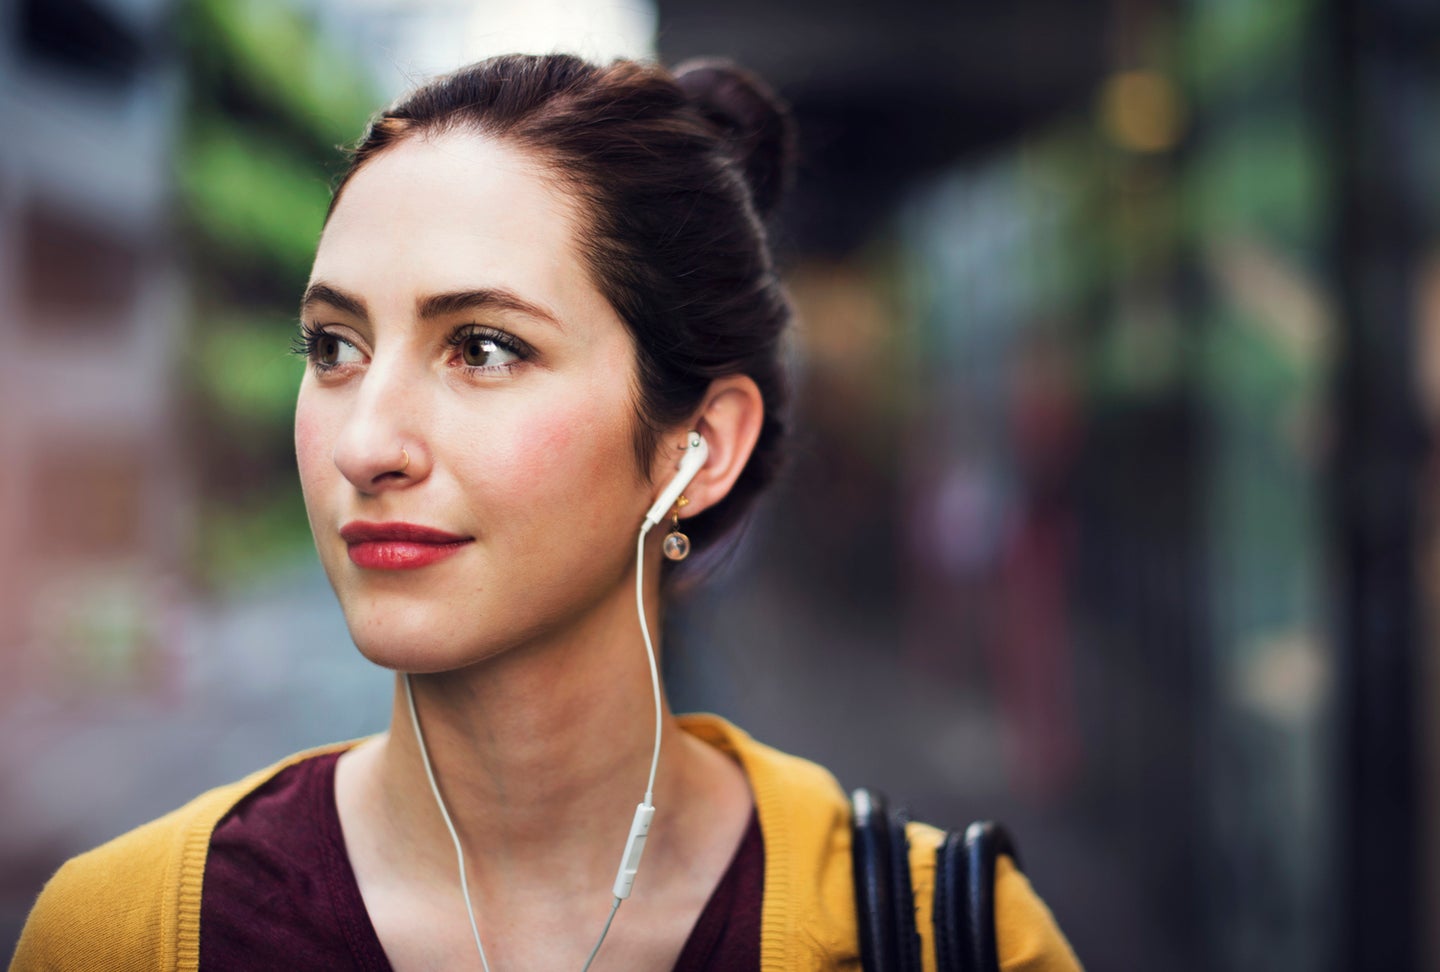 Woman outside wearing headphones